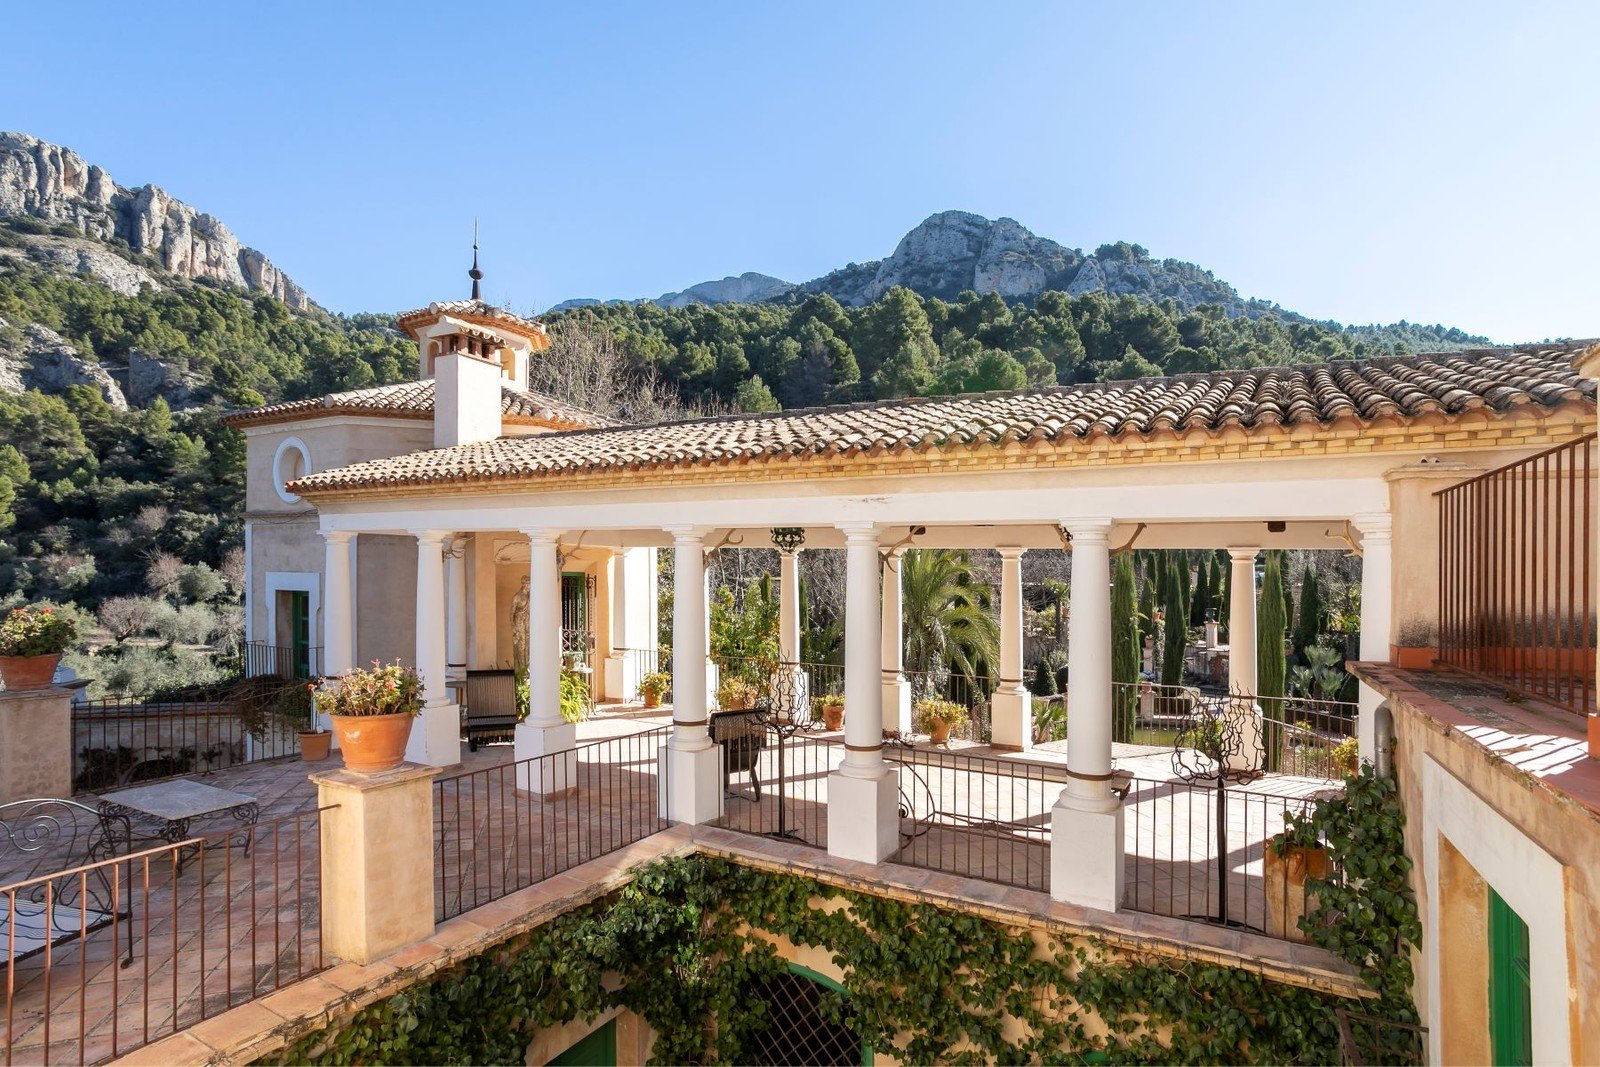 Francis York Stunning Hacienda in the Costa Blanca Hills Near Alicante, Spain 00010.jpeg